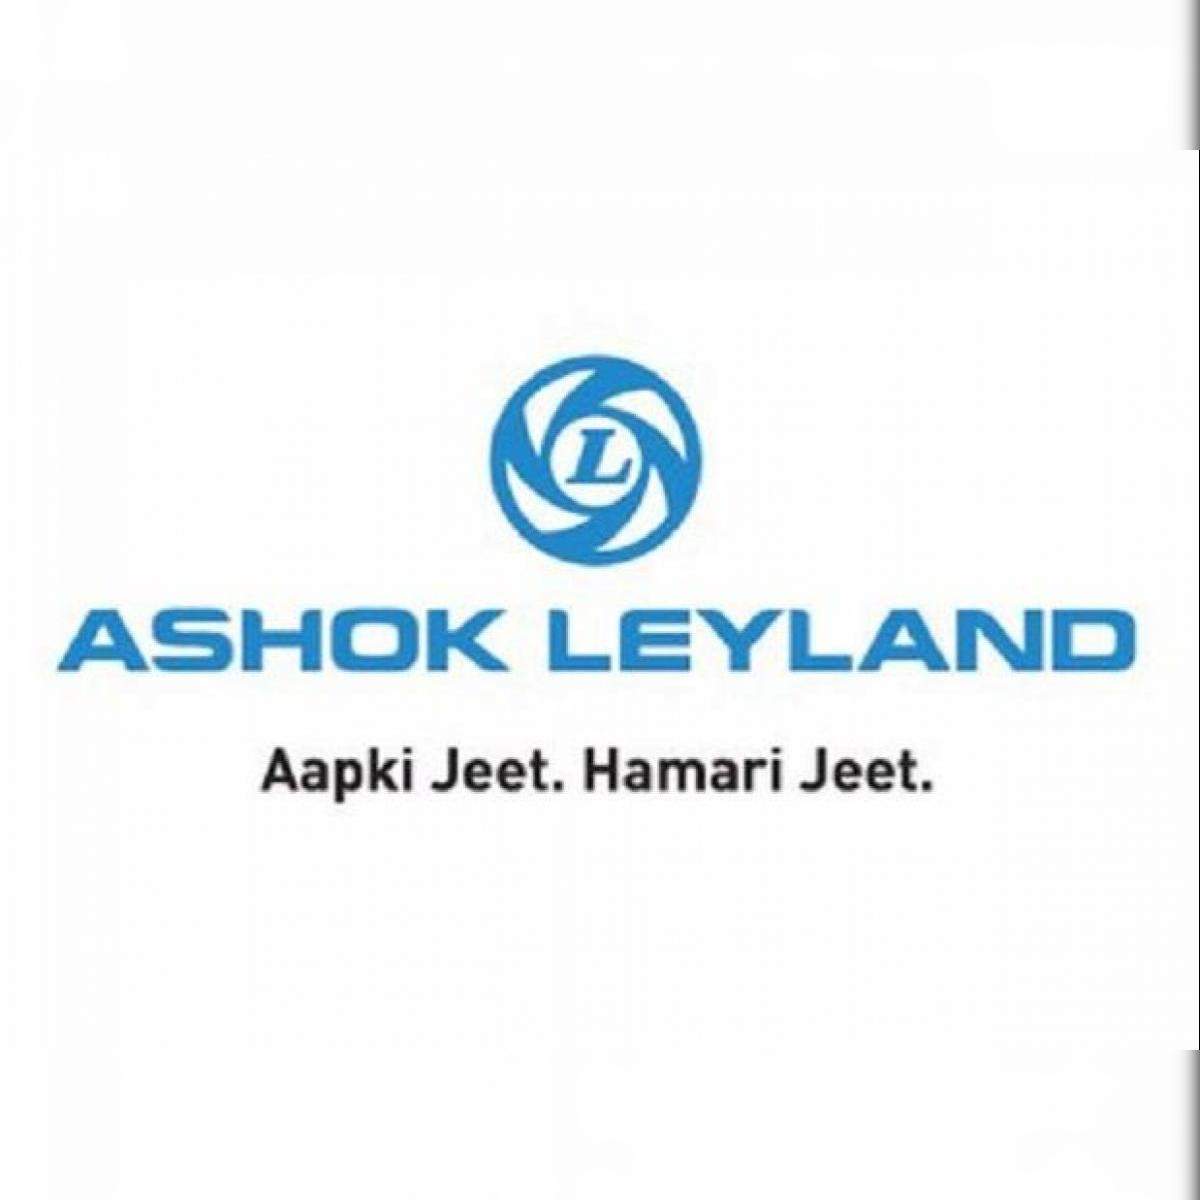 Ashok Leyland ready to ride on Musk's India dream